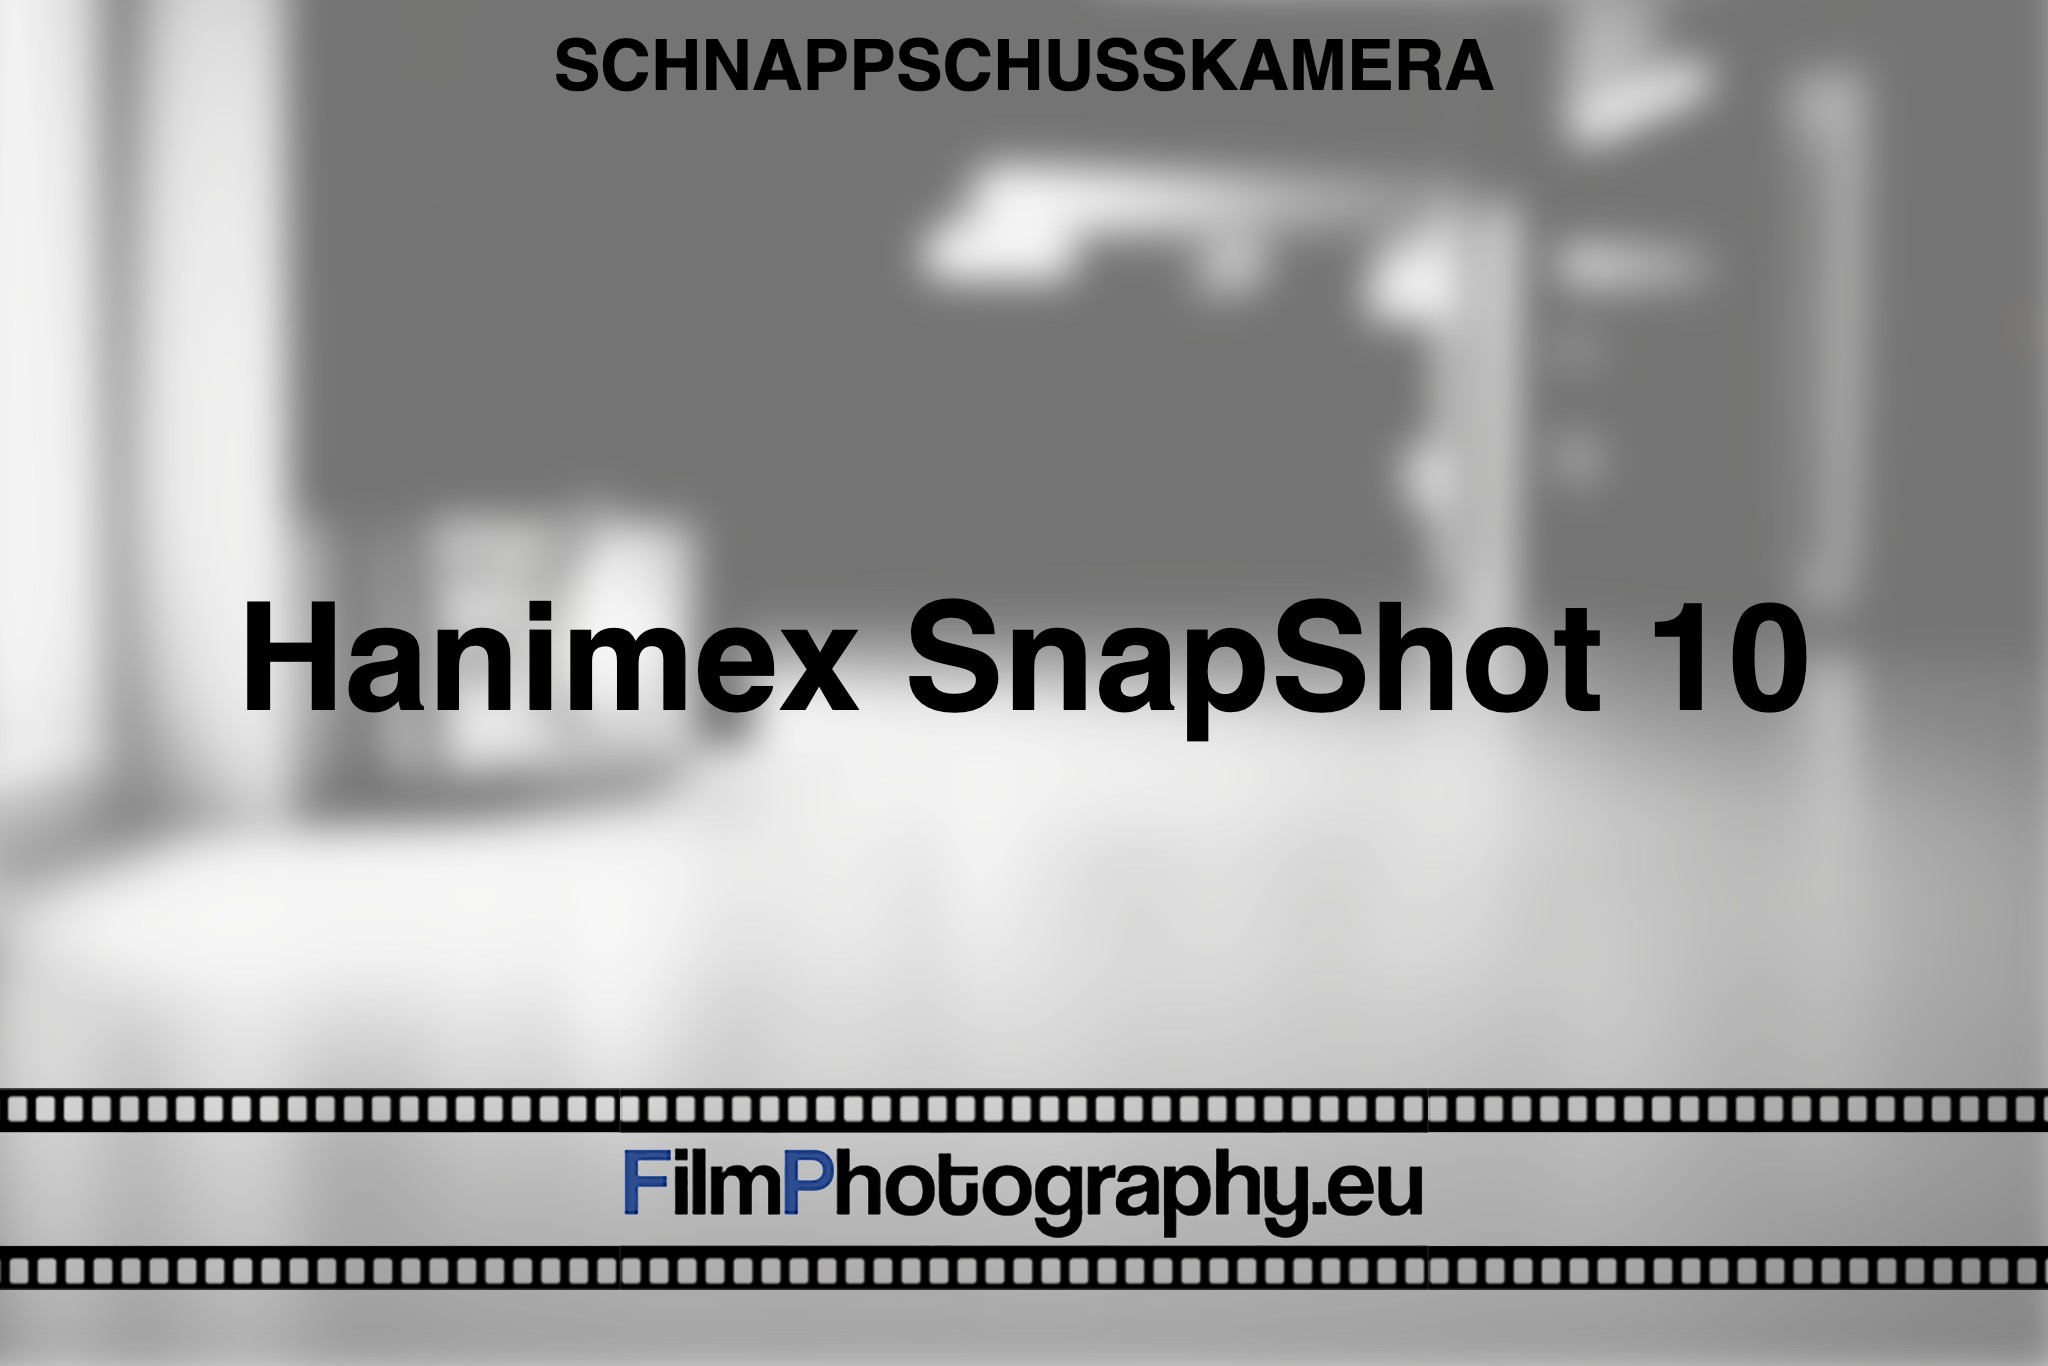 hanimex-snapshot-10-schnappschusskamera-bnv